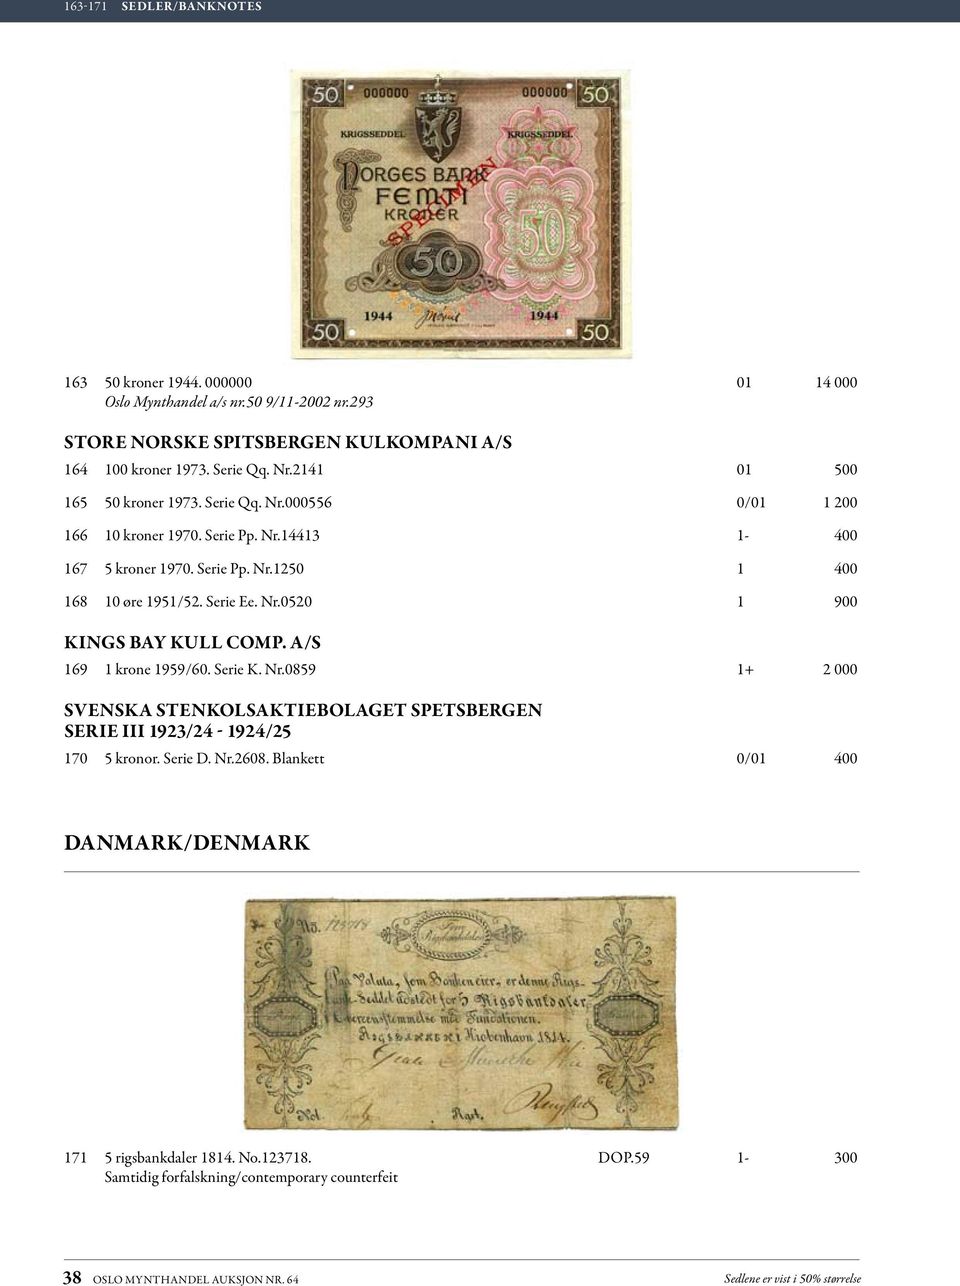 Serie Ee. Nr.0520 1 900 KINGS BAY KULL COMP. A/S 169 1 krone 1959/60. Serie K. Nr.0859 1+ 2 000 SVENSKA STENKOLSAKTIEBOLAGET SPETSBERGEN SERIE III 1923/24-1924/25 170 5 kronor.